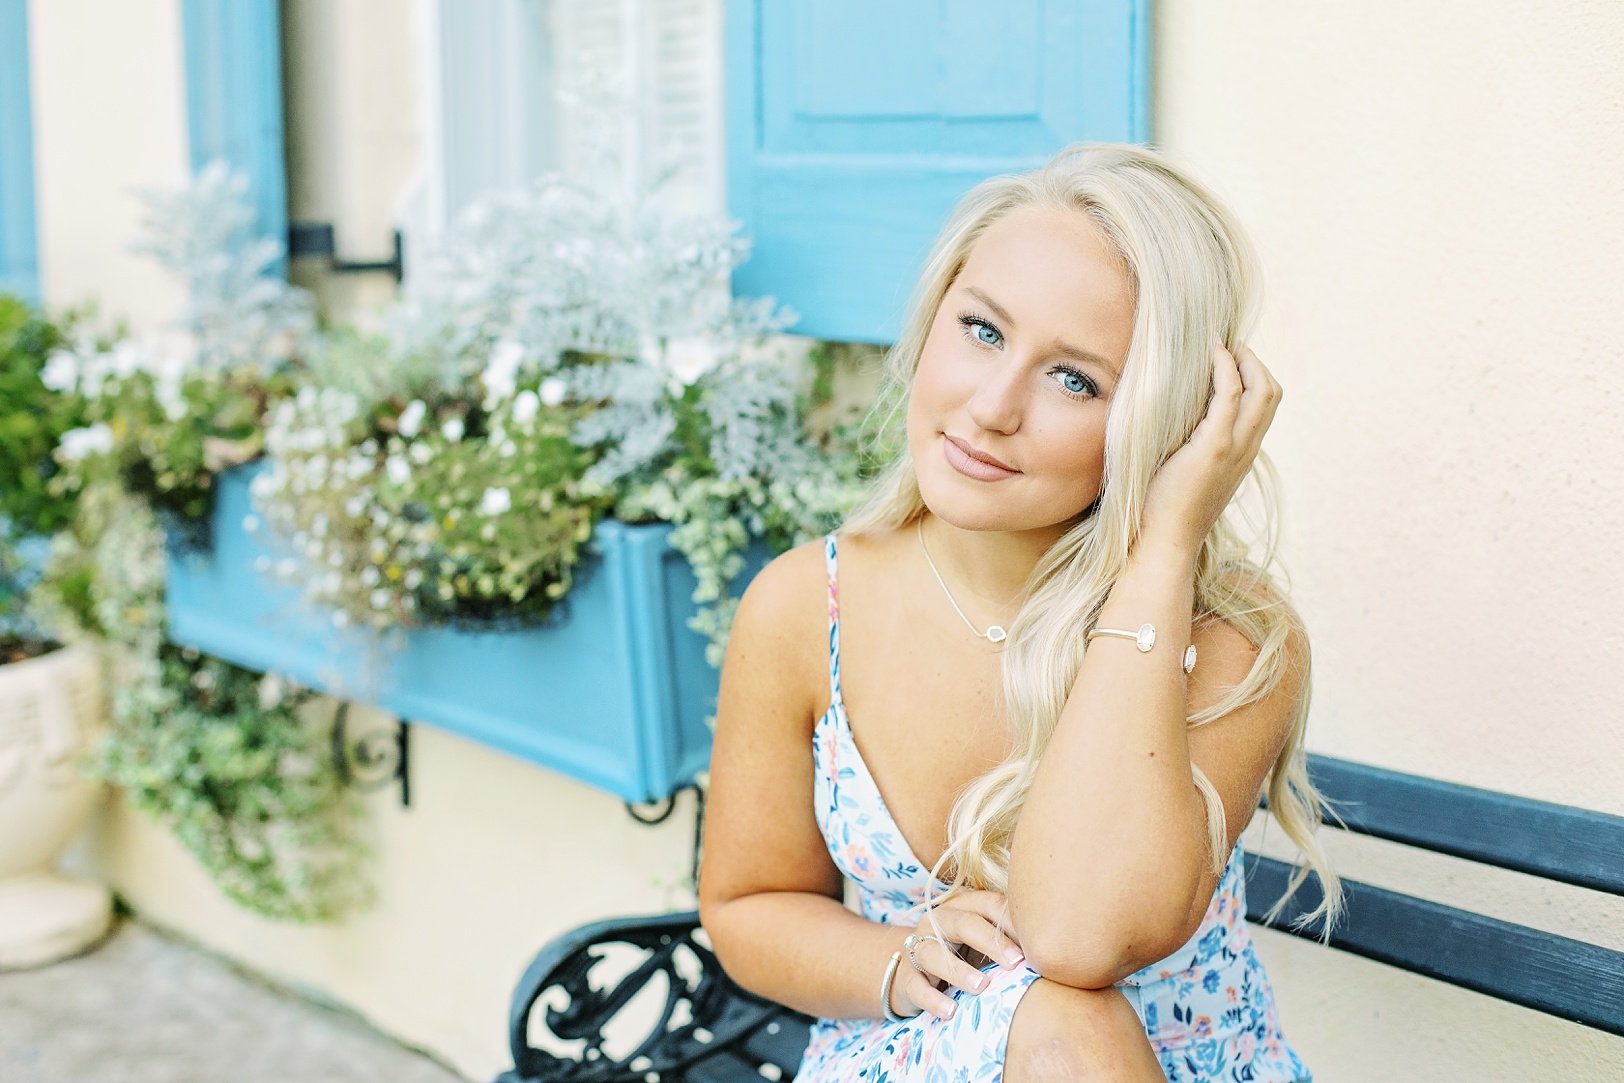 Charleston windowbox charm, pastel colors | Kaitlin Scott Photography